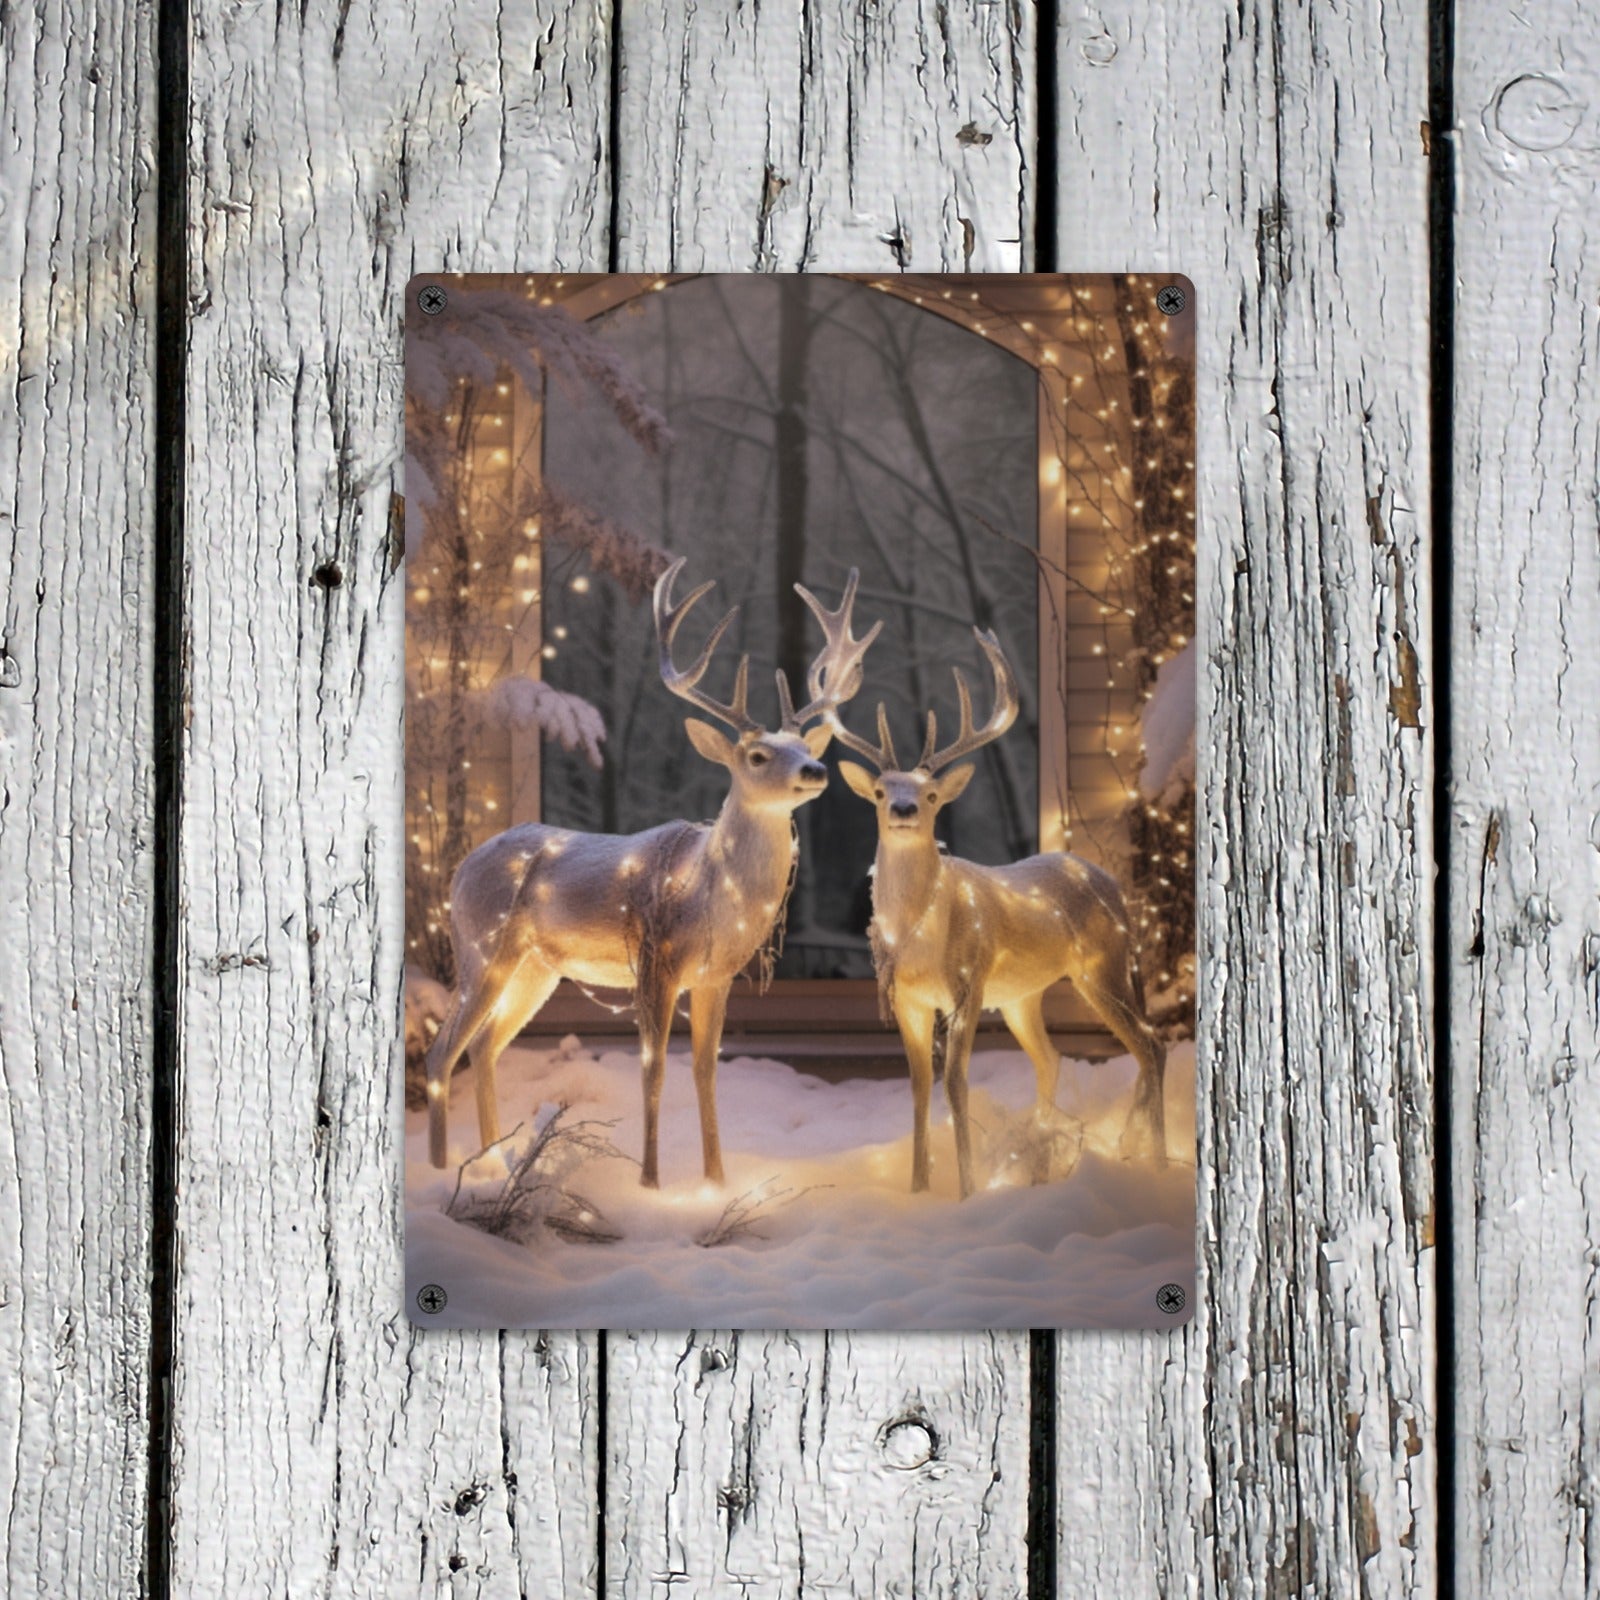 Festive Reindeer Metal Sign | 12x16" Christmas Wall Art | Indoor/Outdoor Holiday Decor